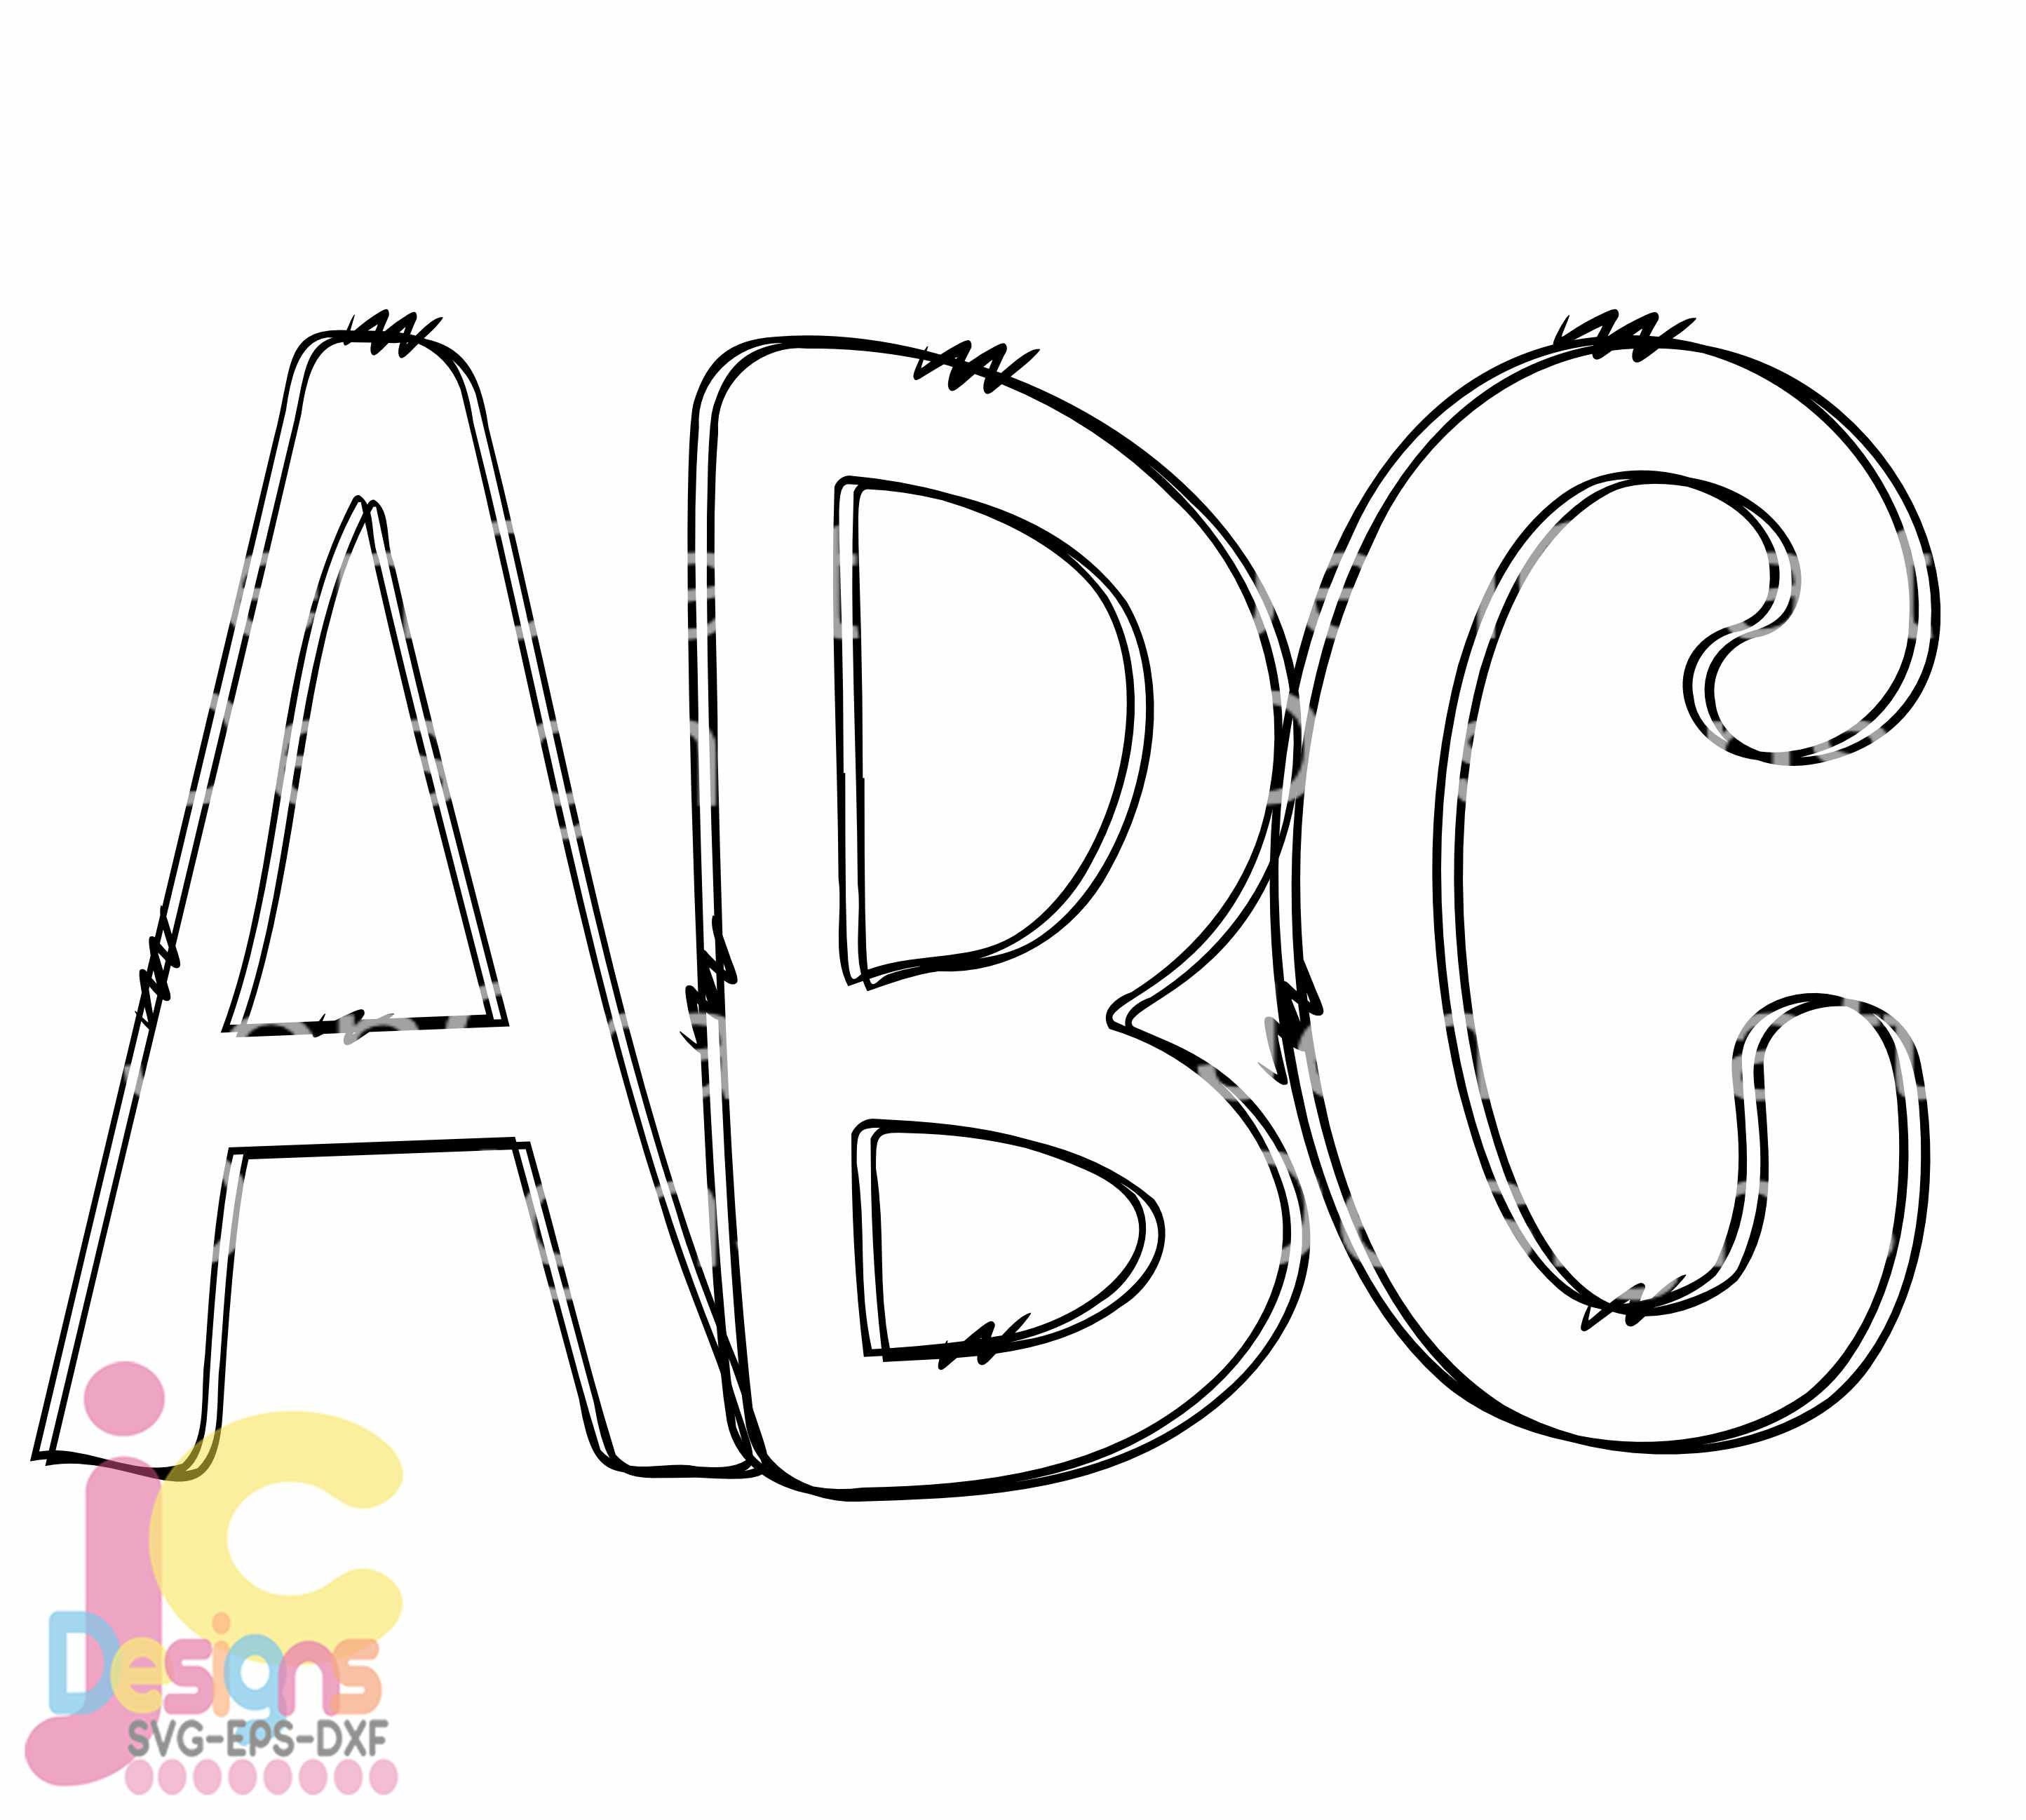 Download Doodle Letters SVG Transparent Hand Drawn Alphabet Letters ...